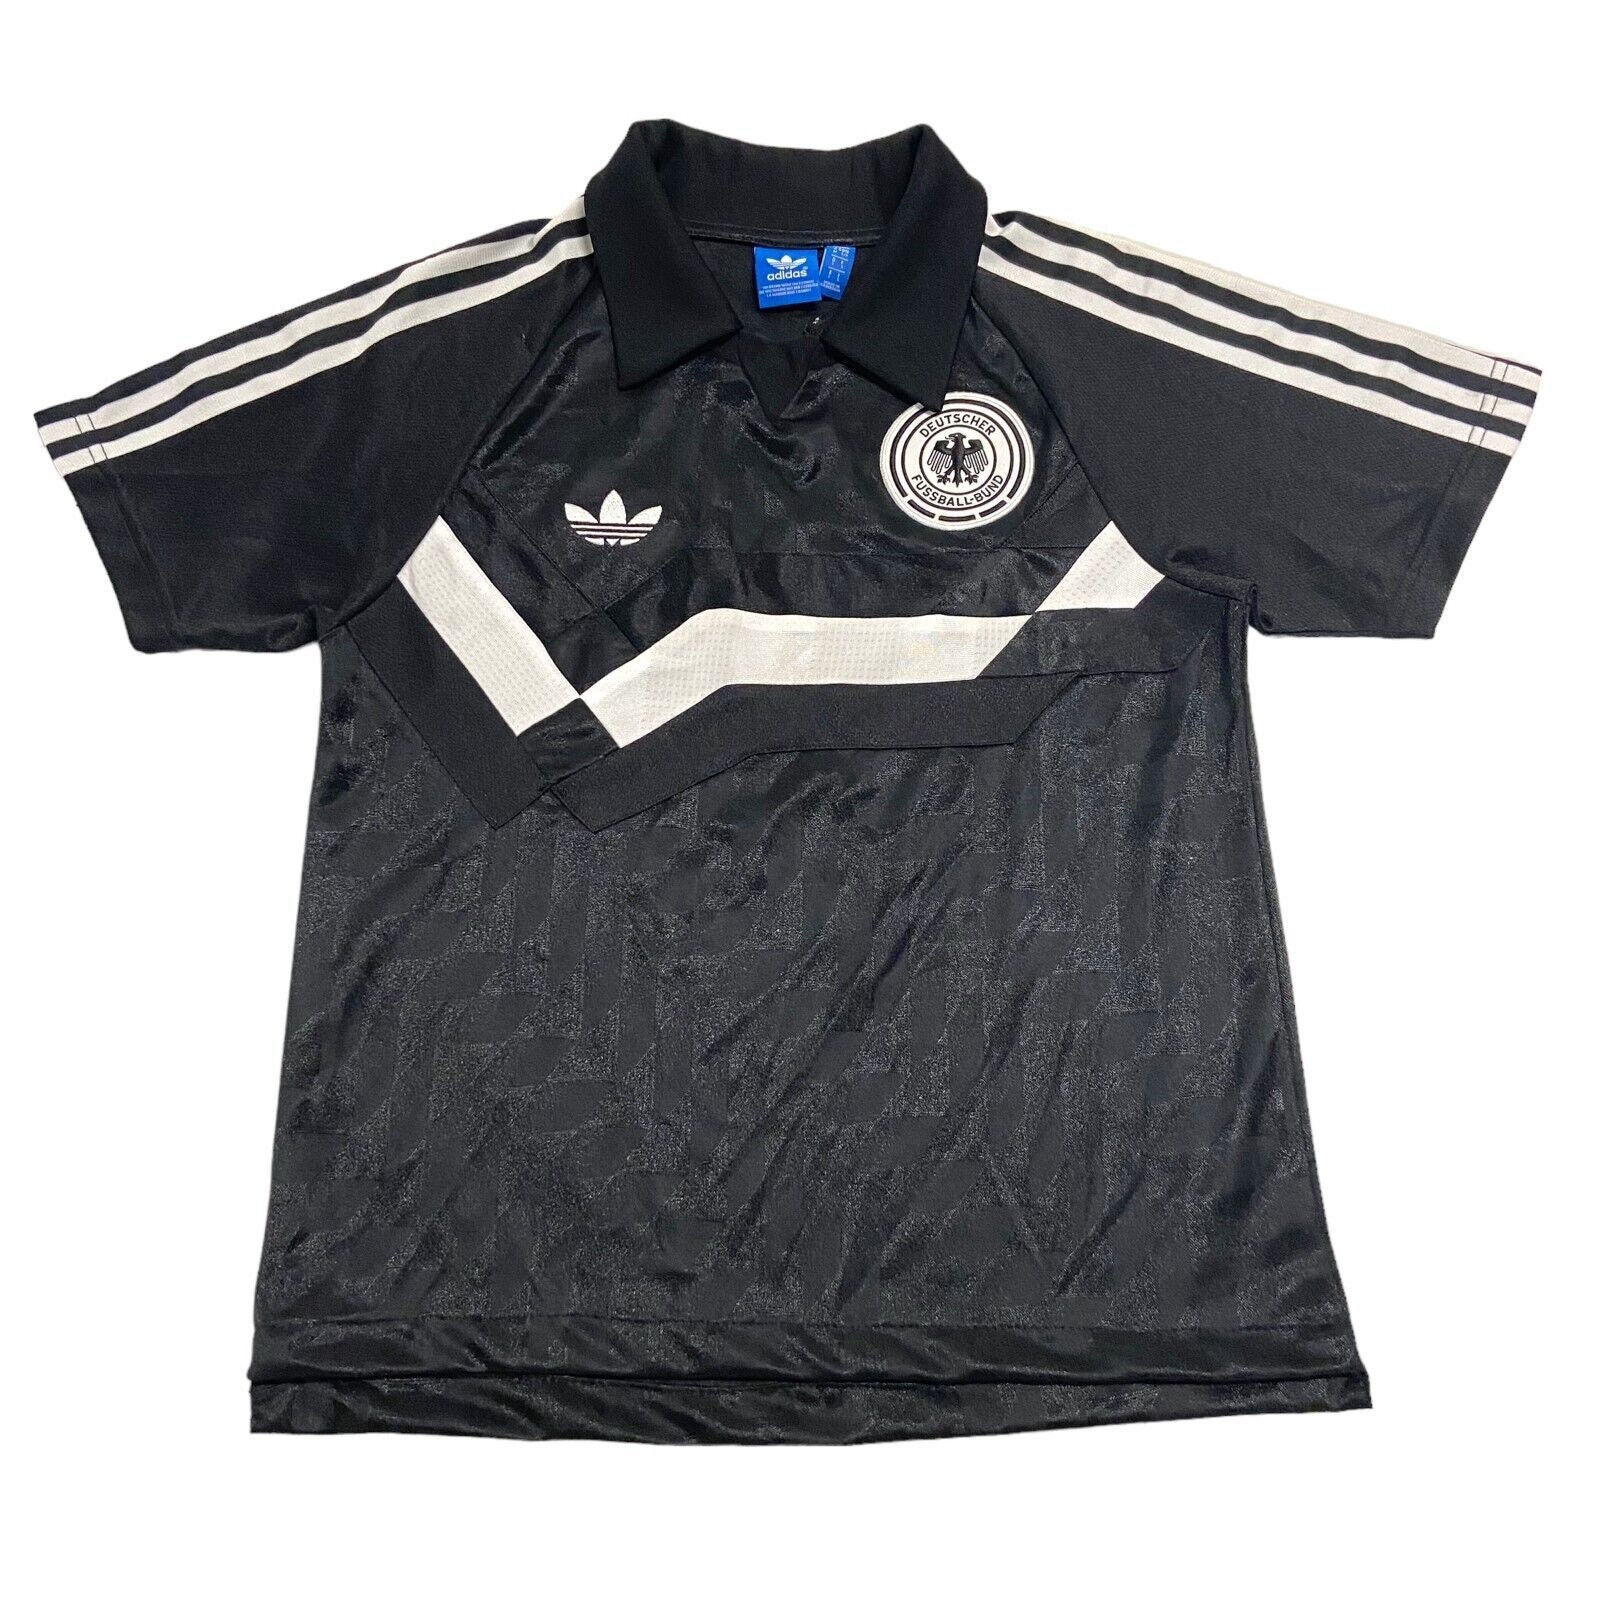 At regere nudler dechifrere Germany National Team Adidas Originals Shirt Football - Etsy